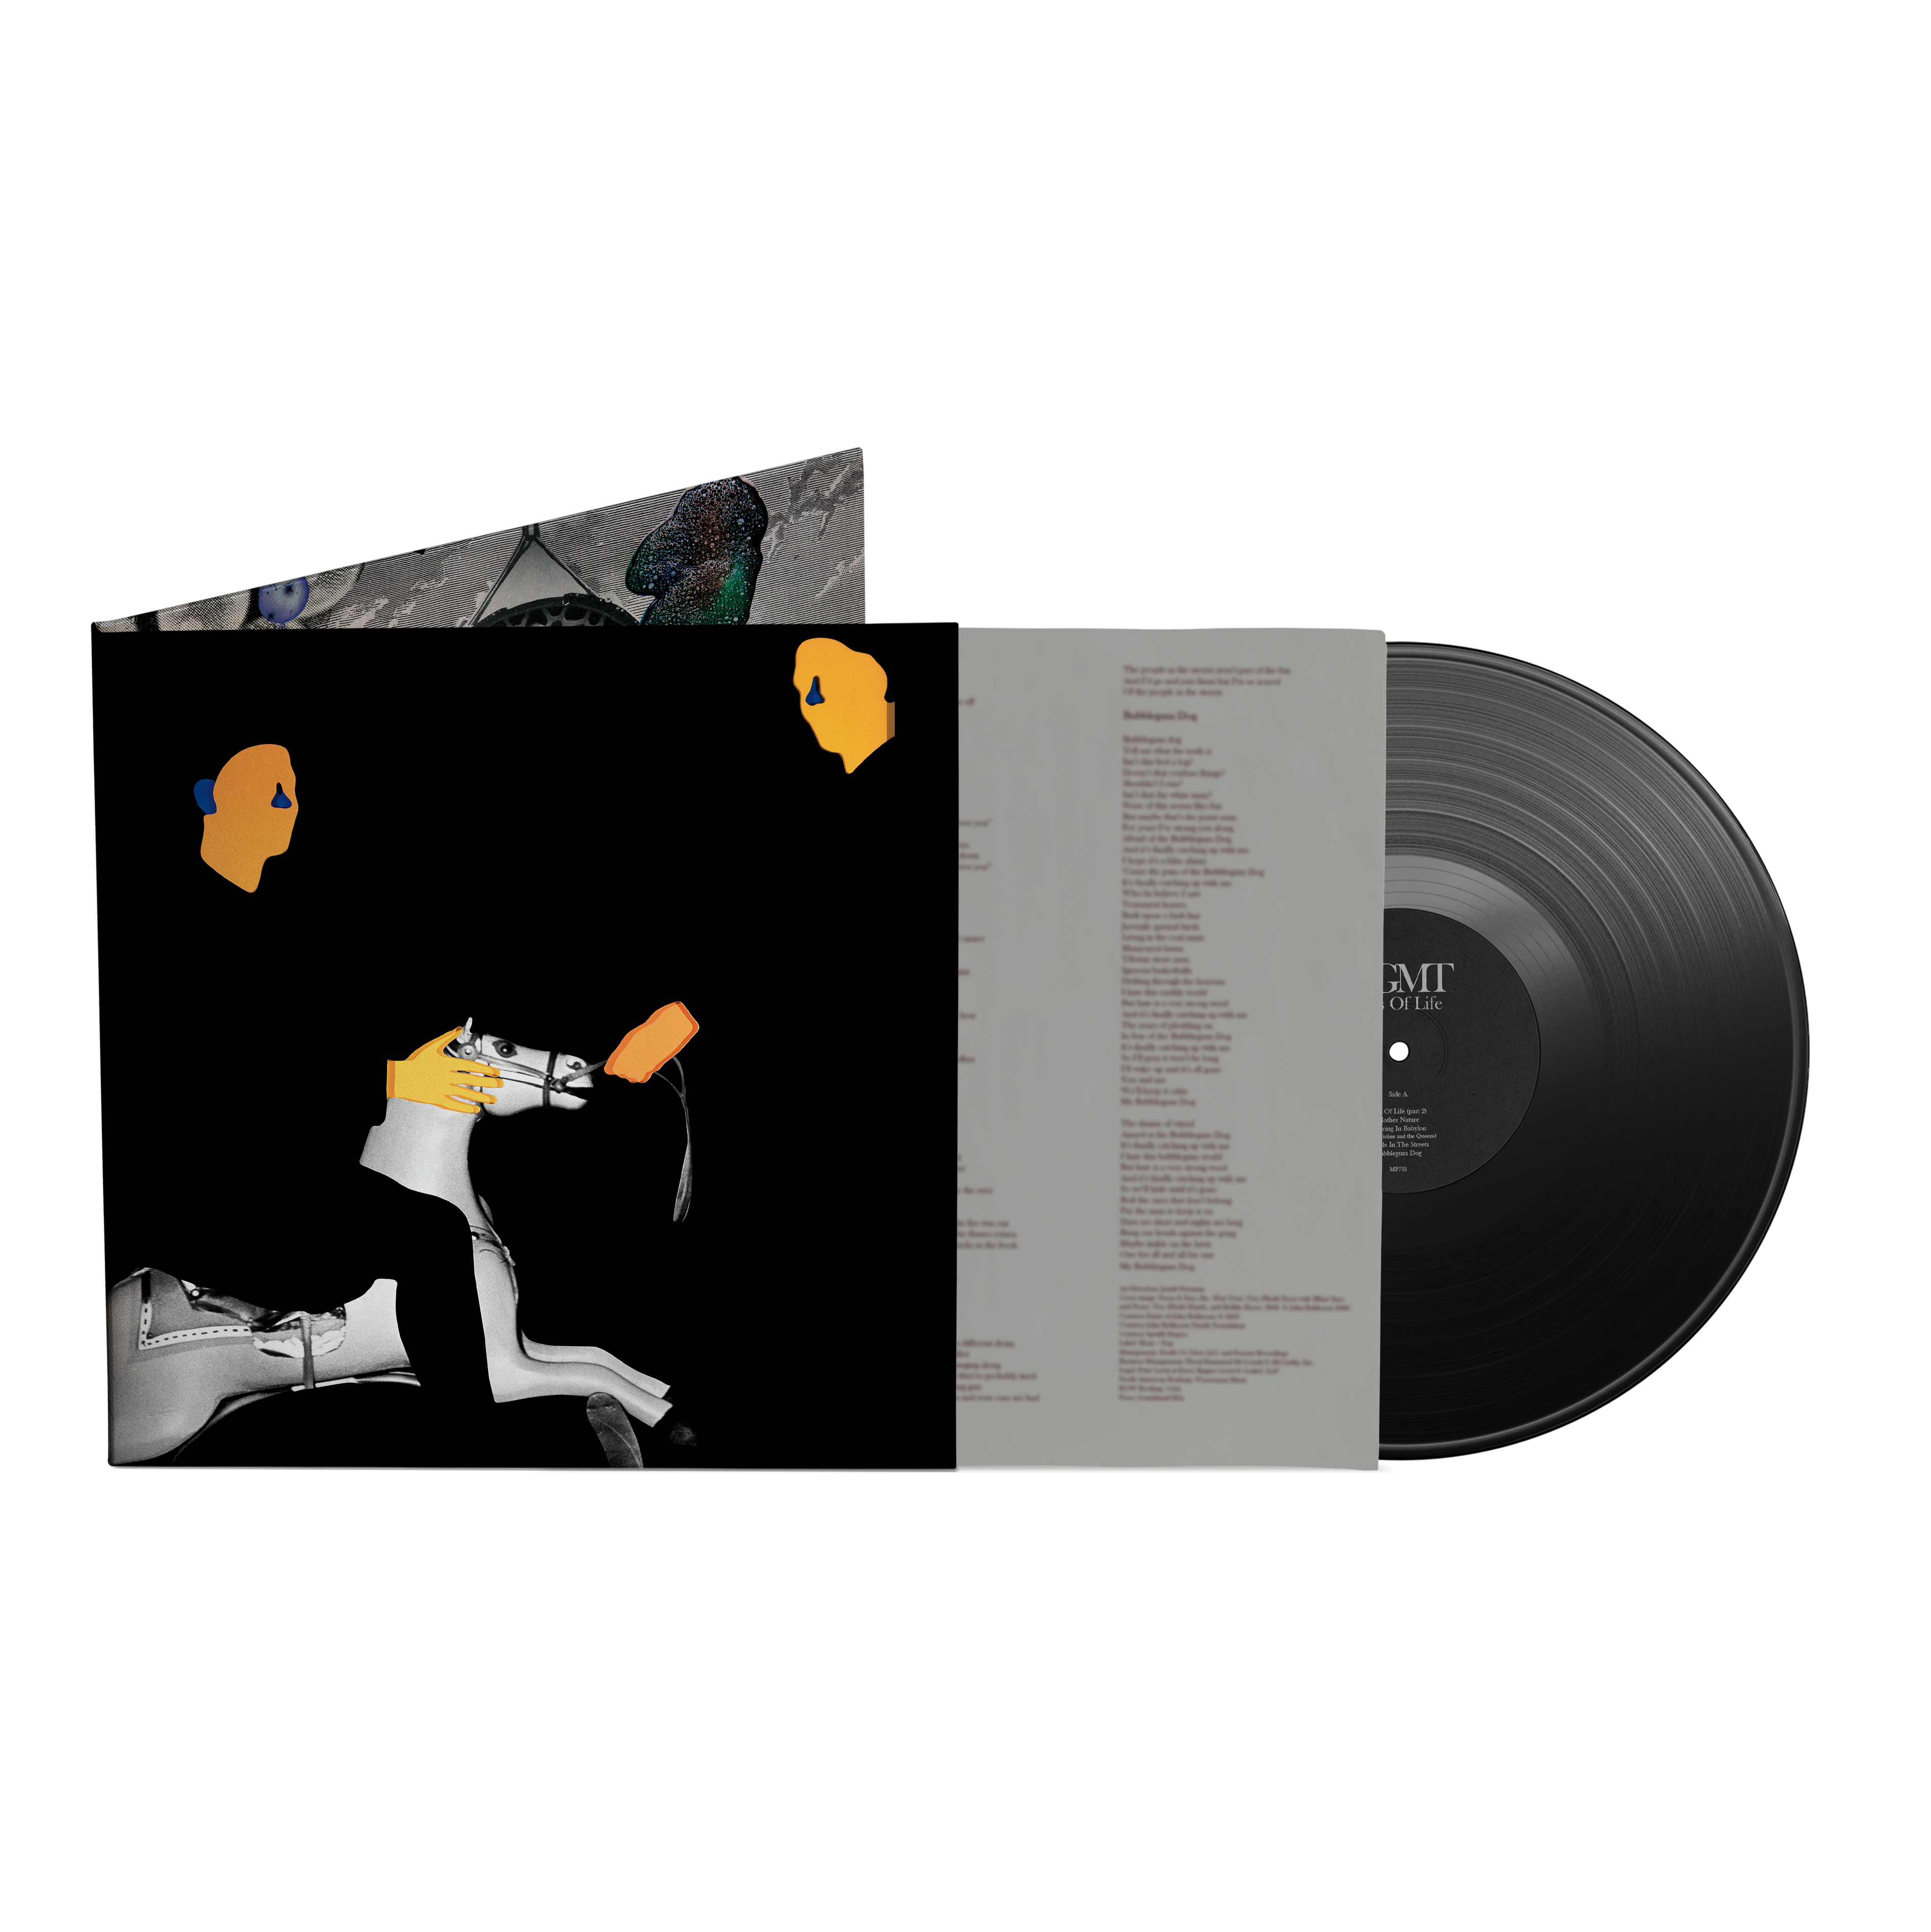 MGMT - Loss Of Life: Vinyl LP